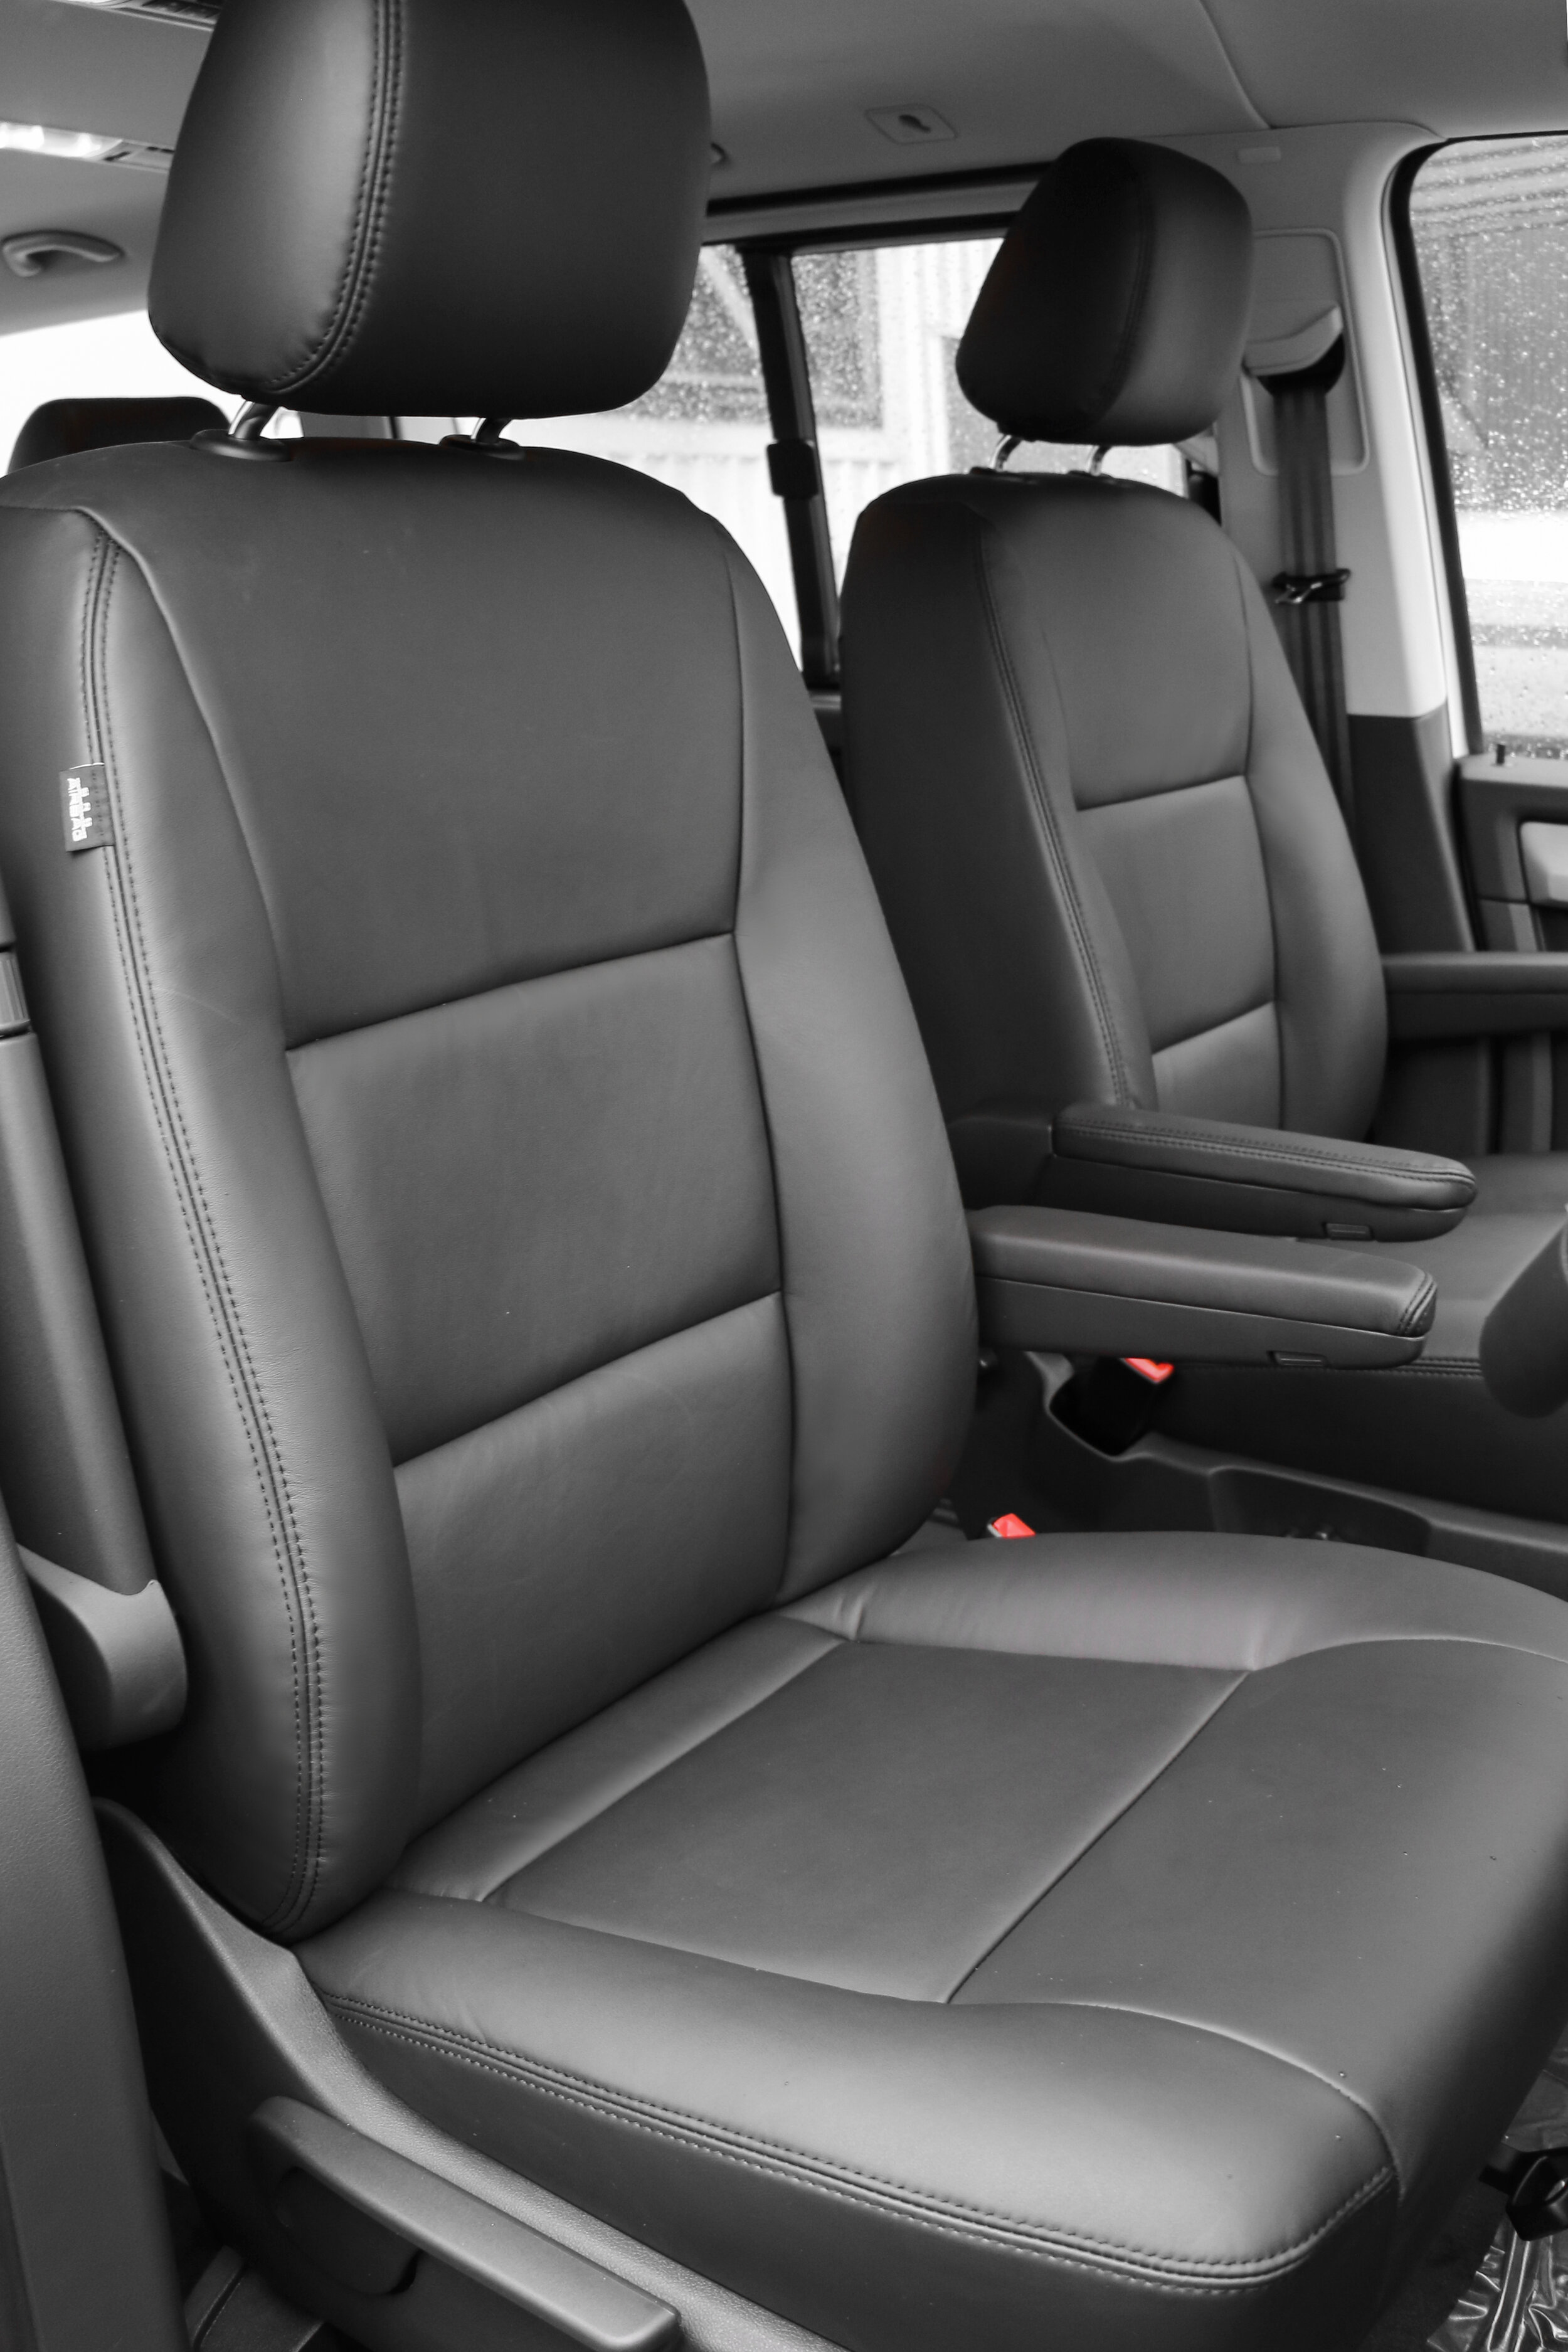 VW TRANSPORTER T5 MULTIVAN INTERIOR MATERIAL SOFA SEAT SEATS SEAT